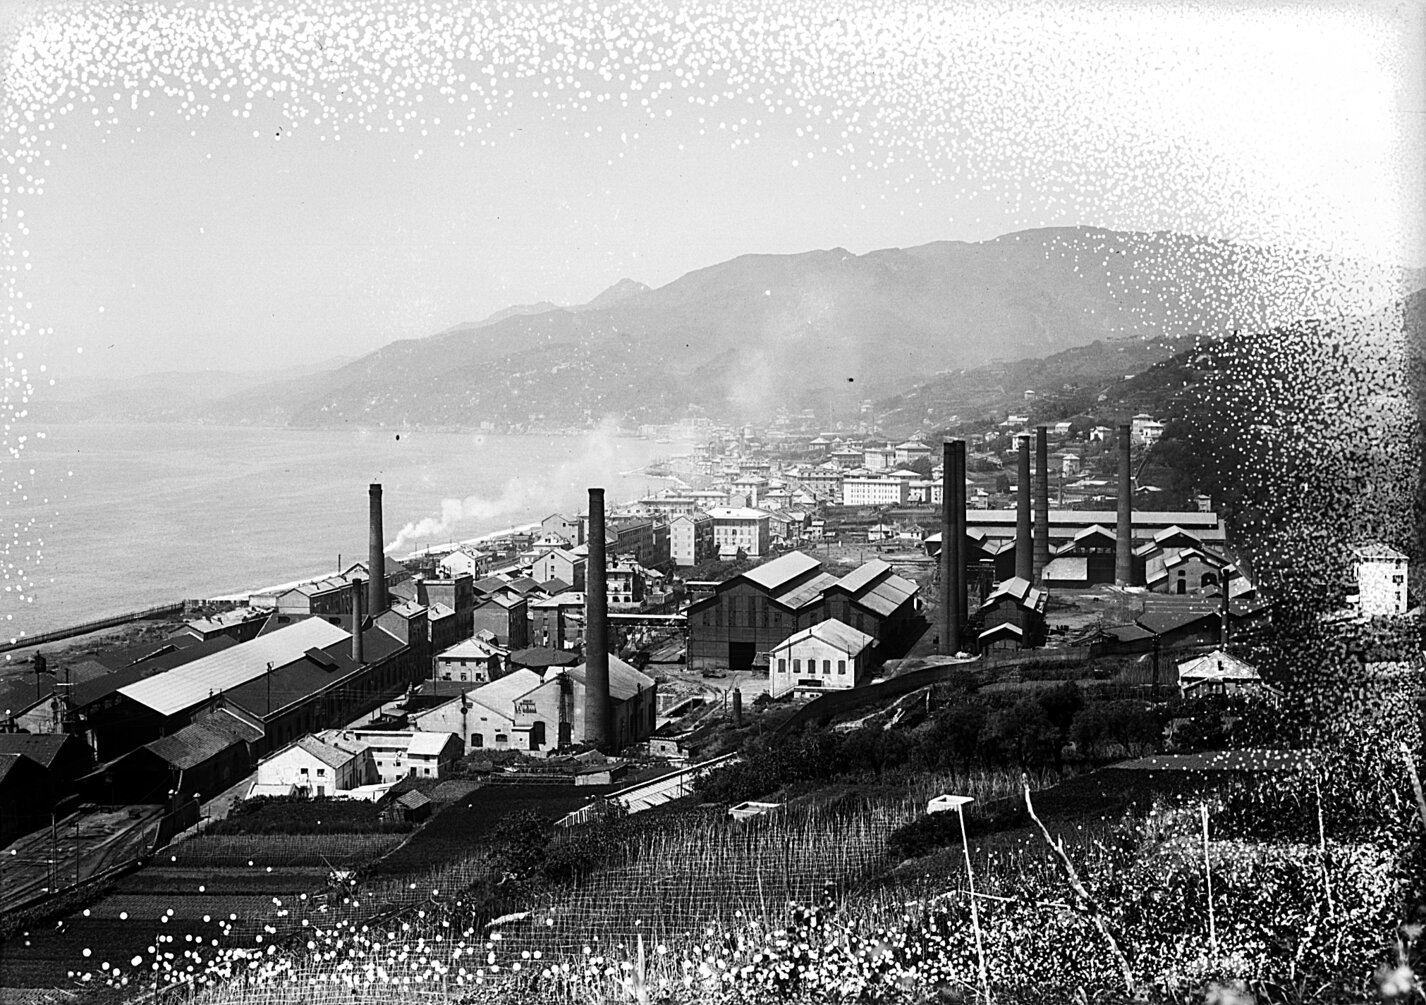 negativo n° 8899 Pra. Panorama dall'alto - 12 giugno 1928.jpg